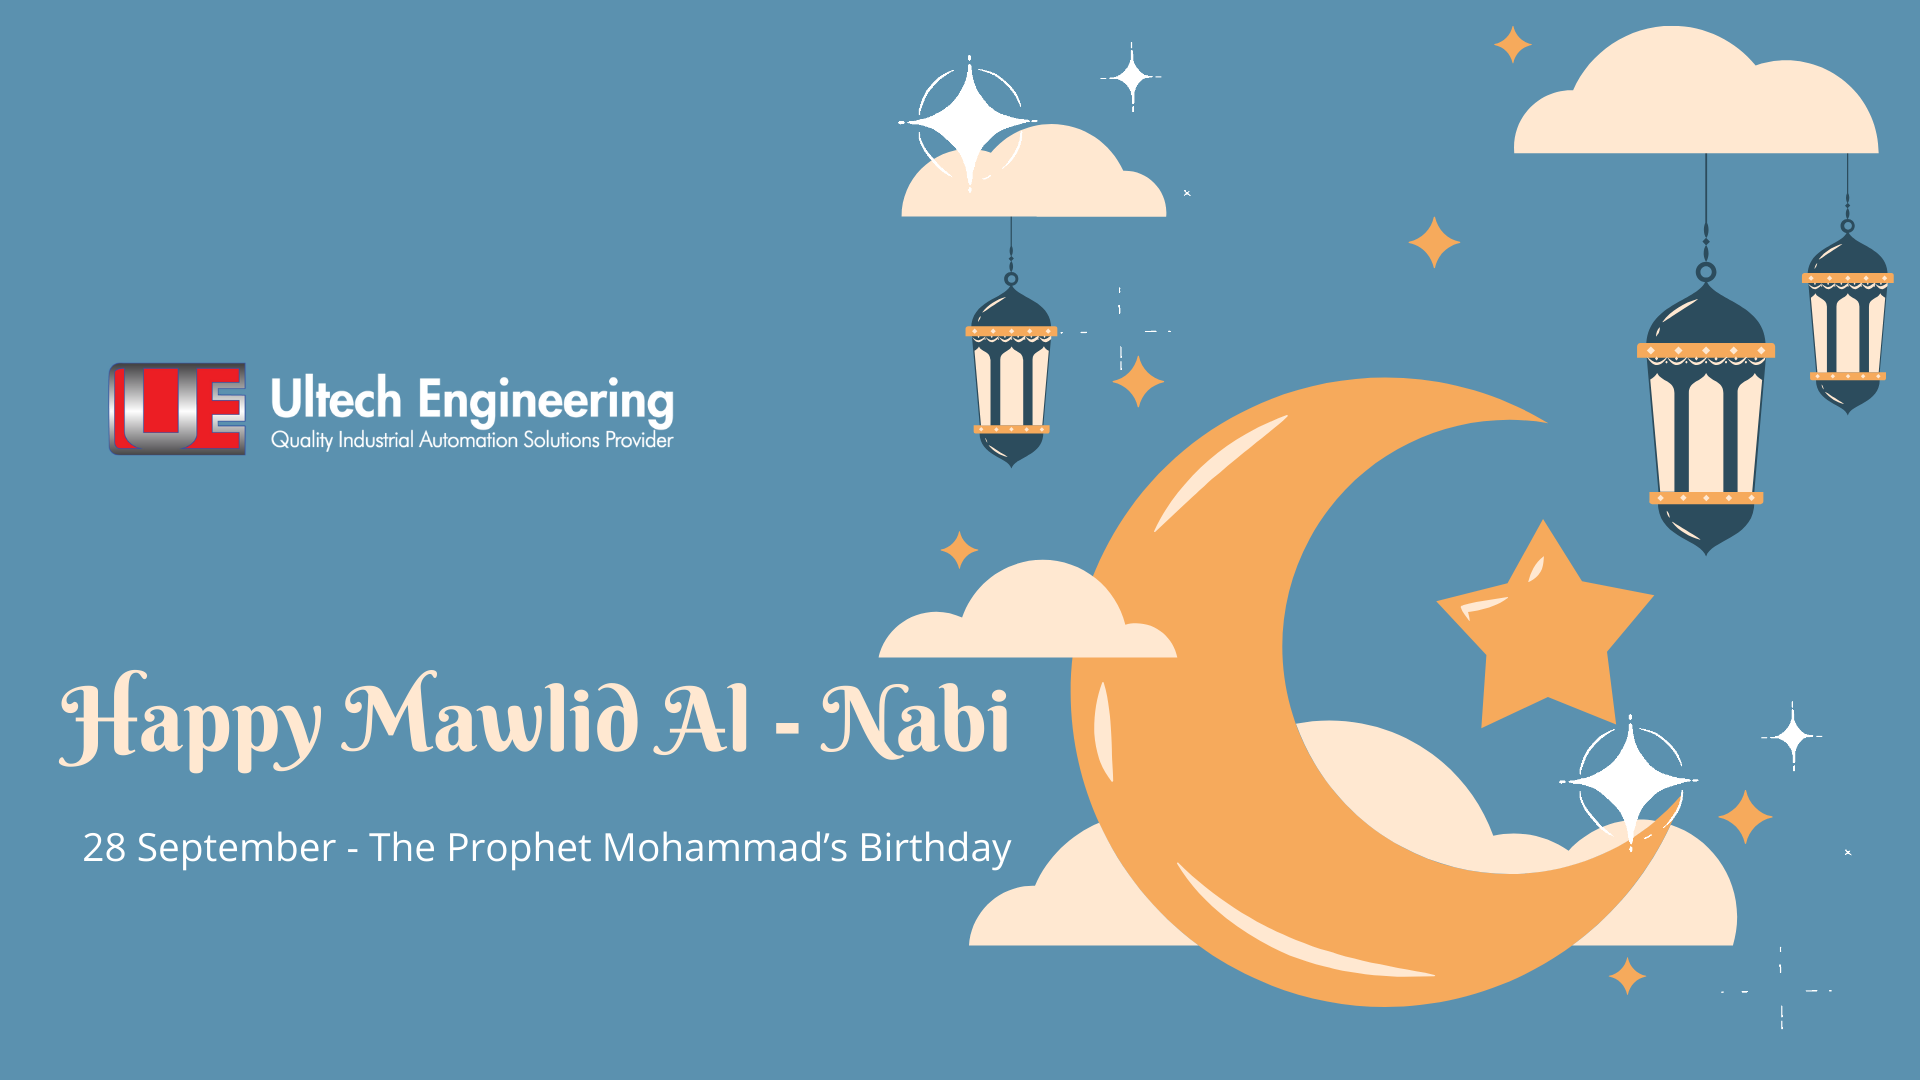 Ultech Engineering wishes Happy Mawlid Al - Nabi Prophet Mohammad's Birthday